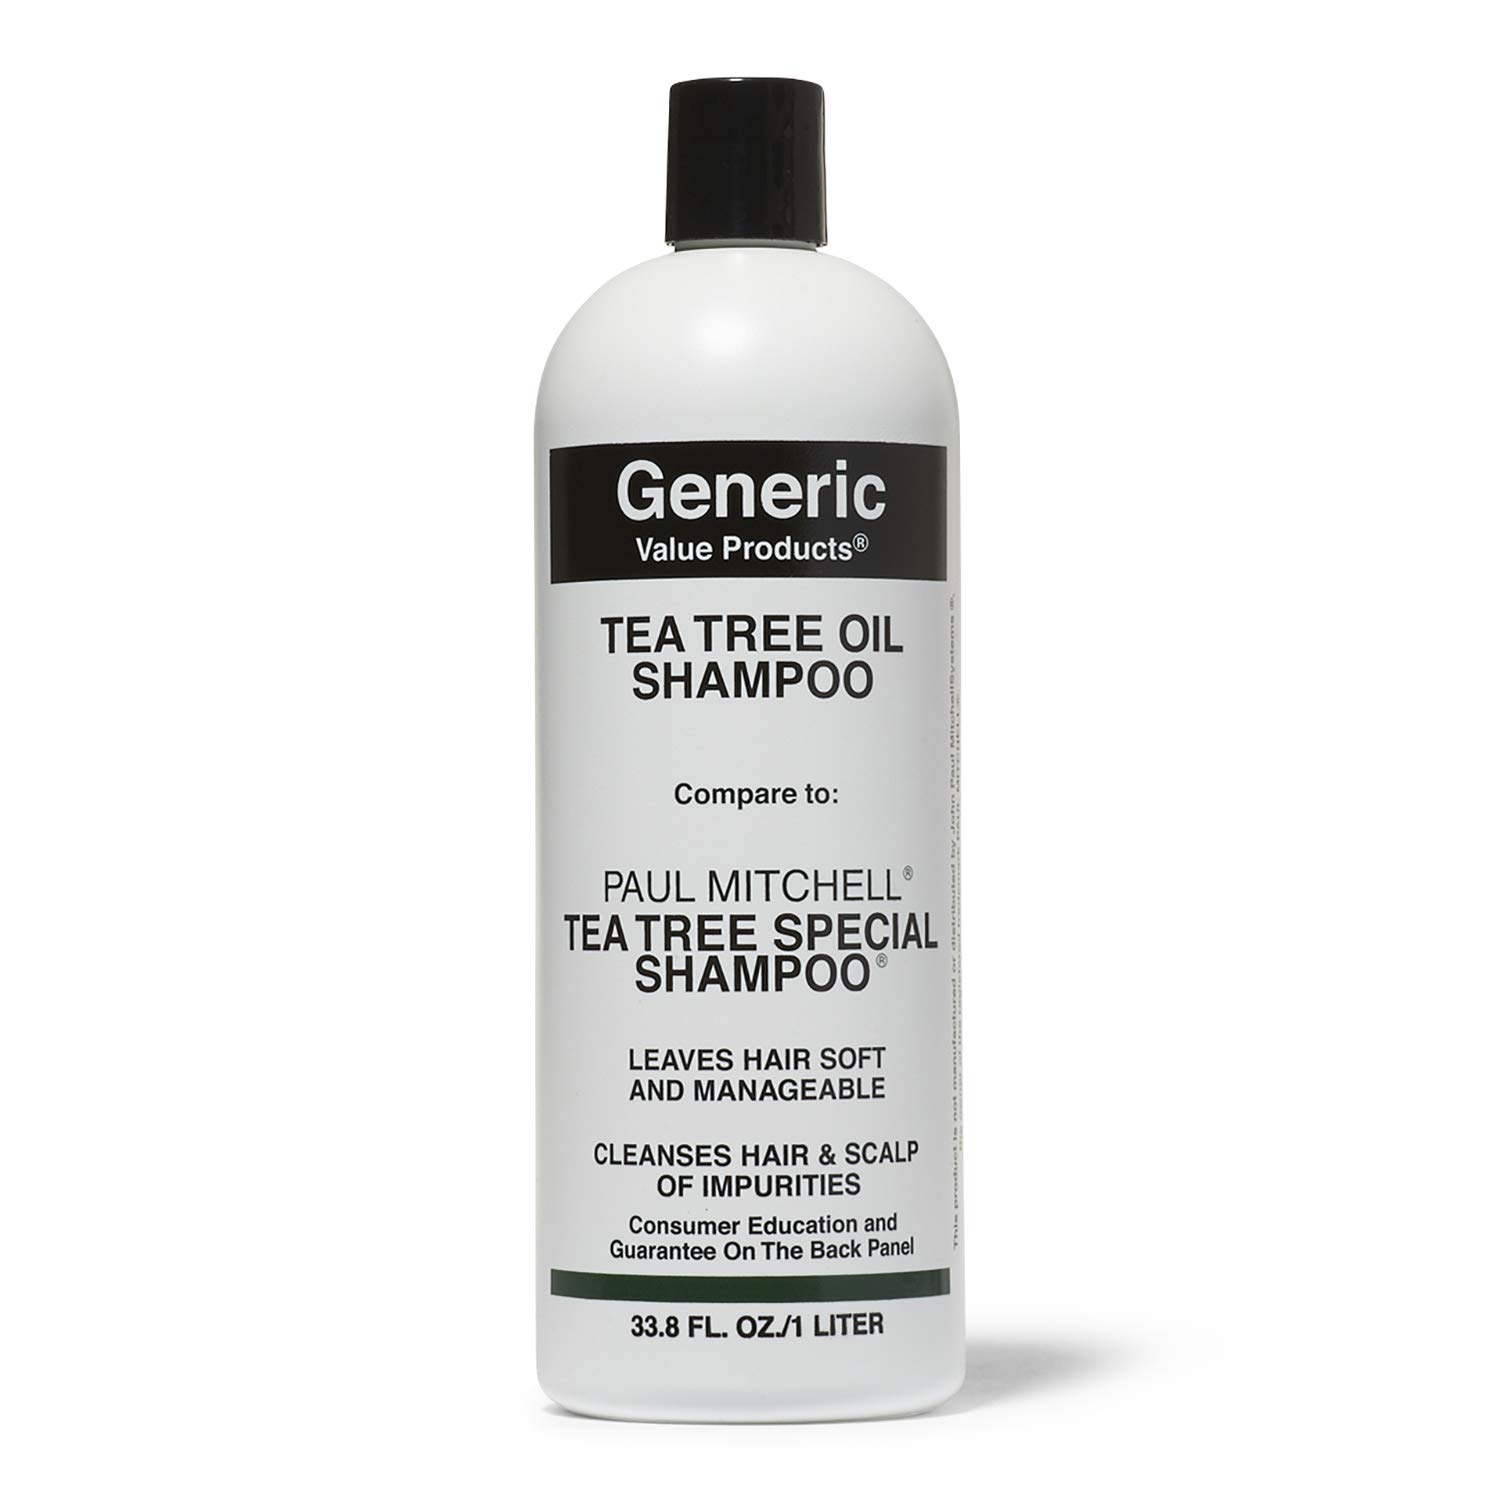 Generic Paul Mitchell Tea Tree Shampoo Review